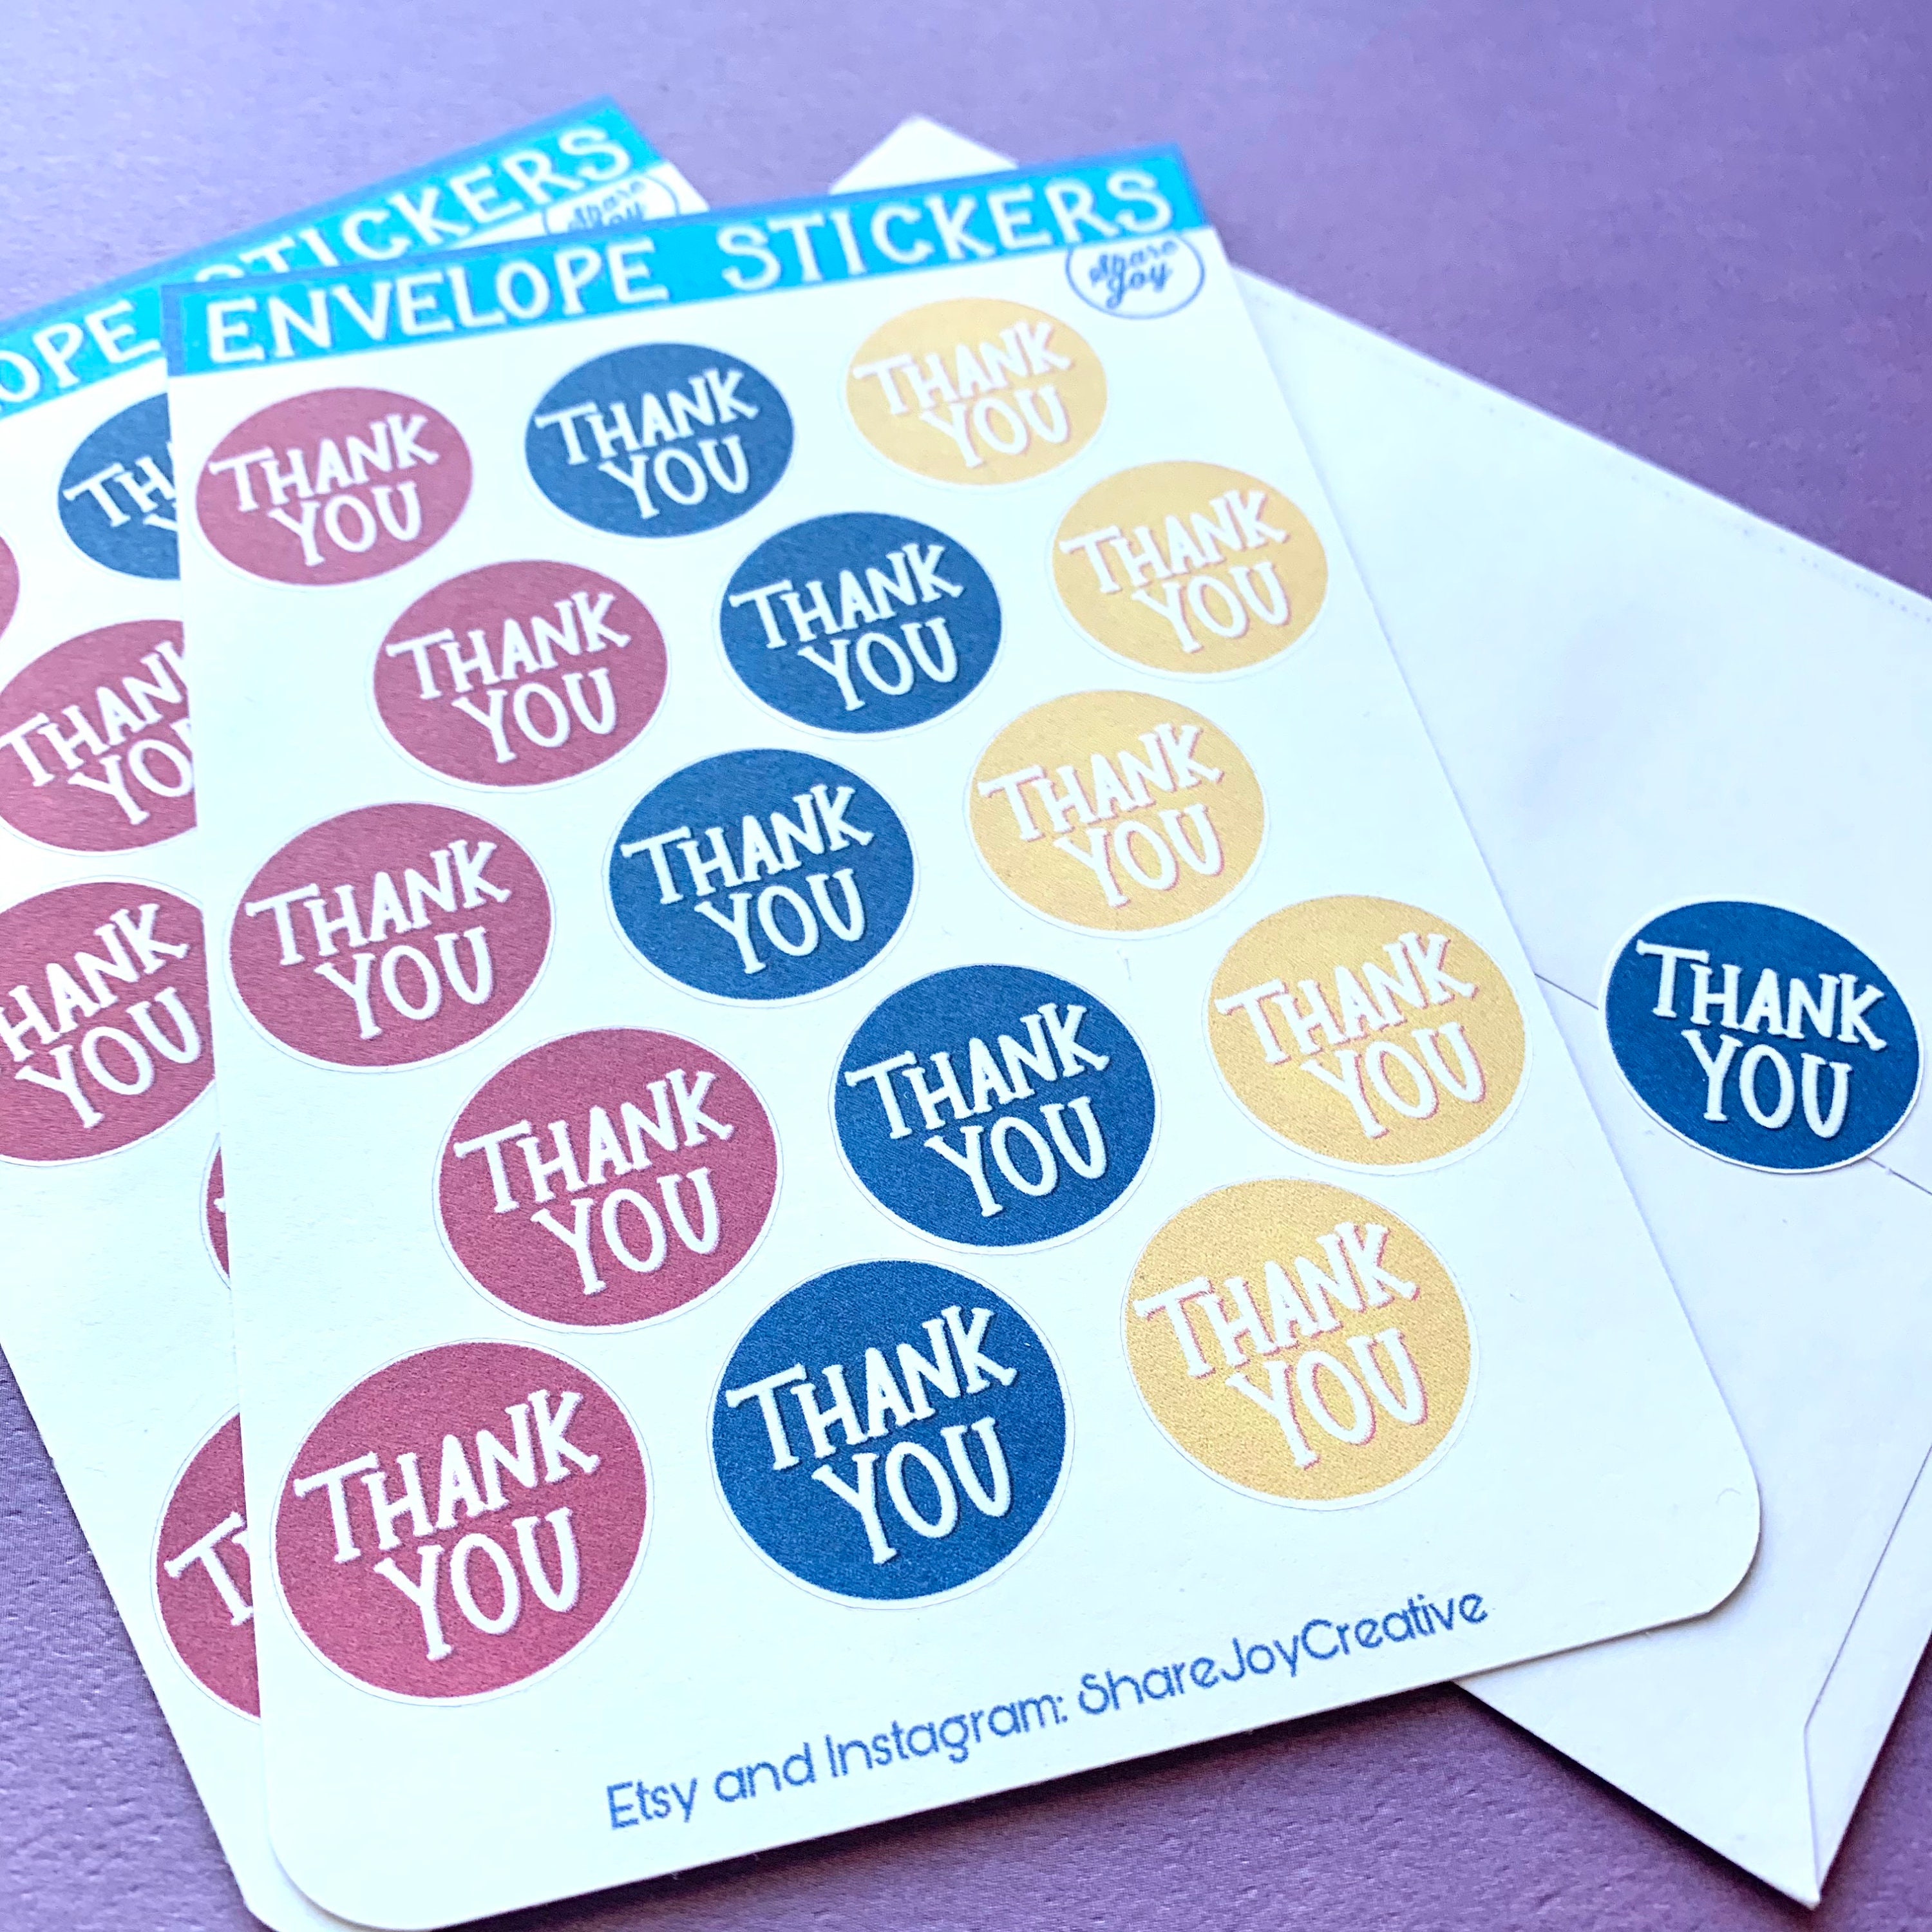 Thank you Sticker sheet for envelopes envelope stickers | Etsy